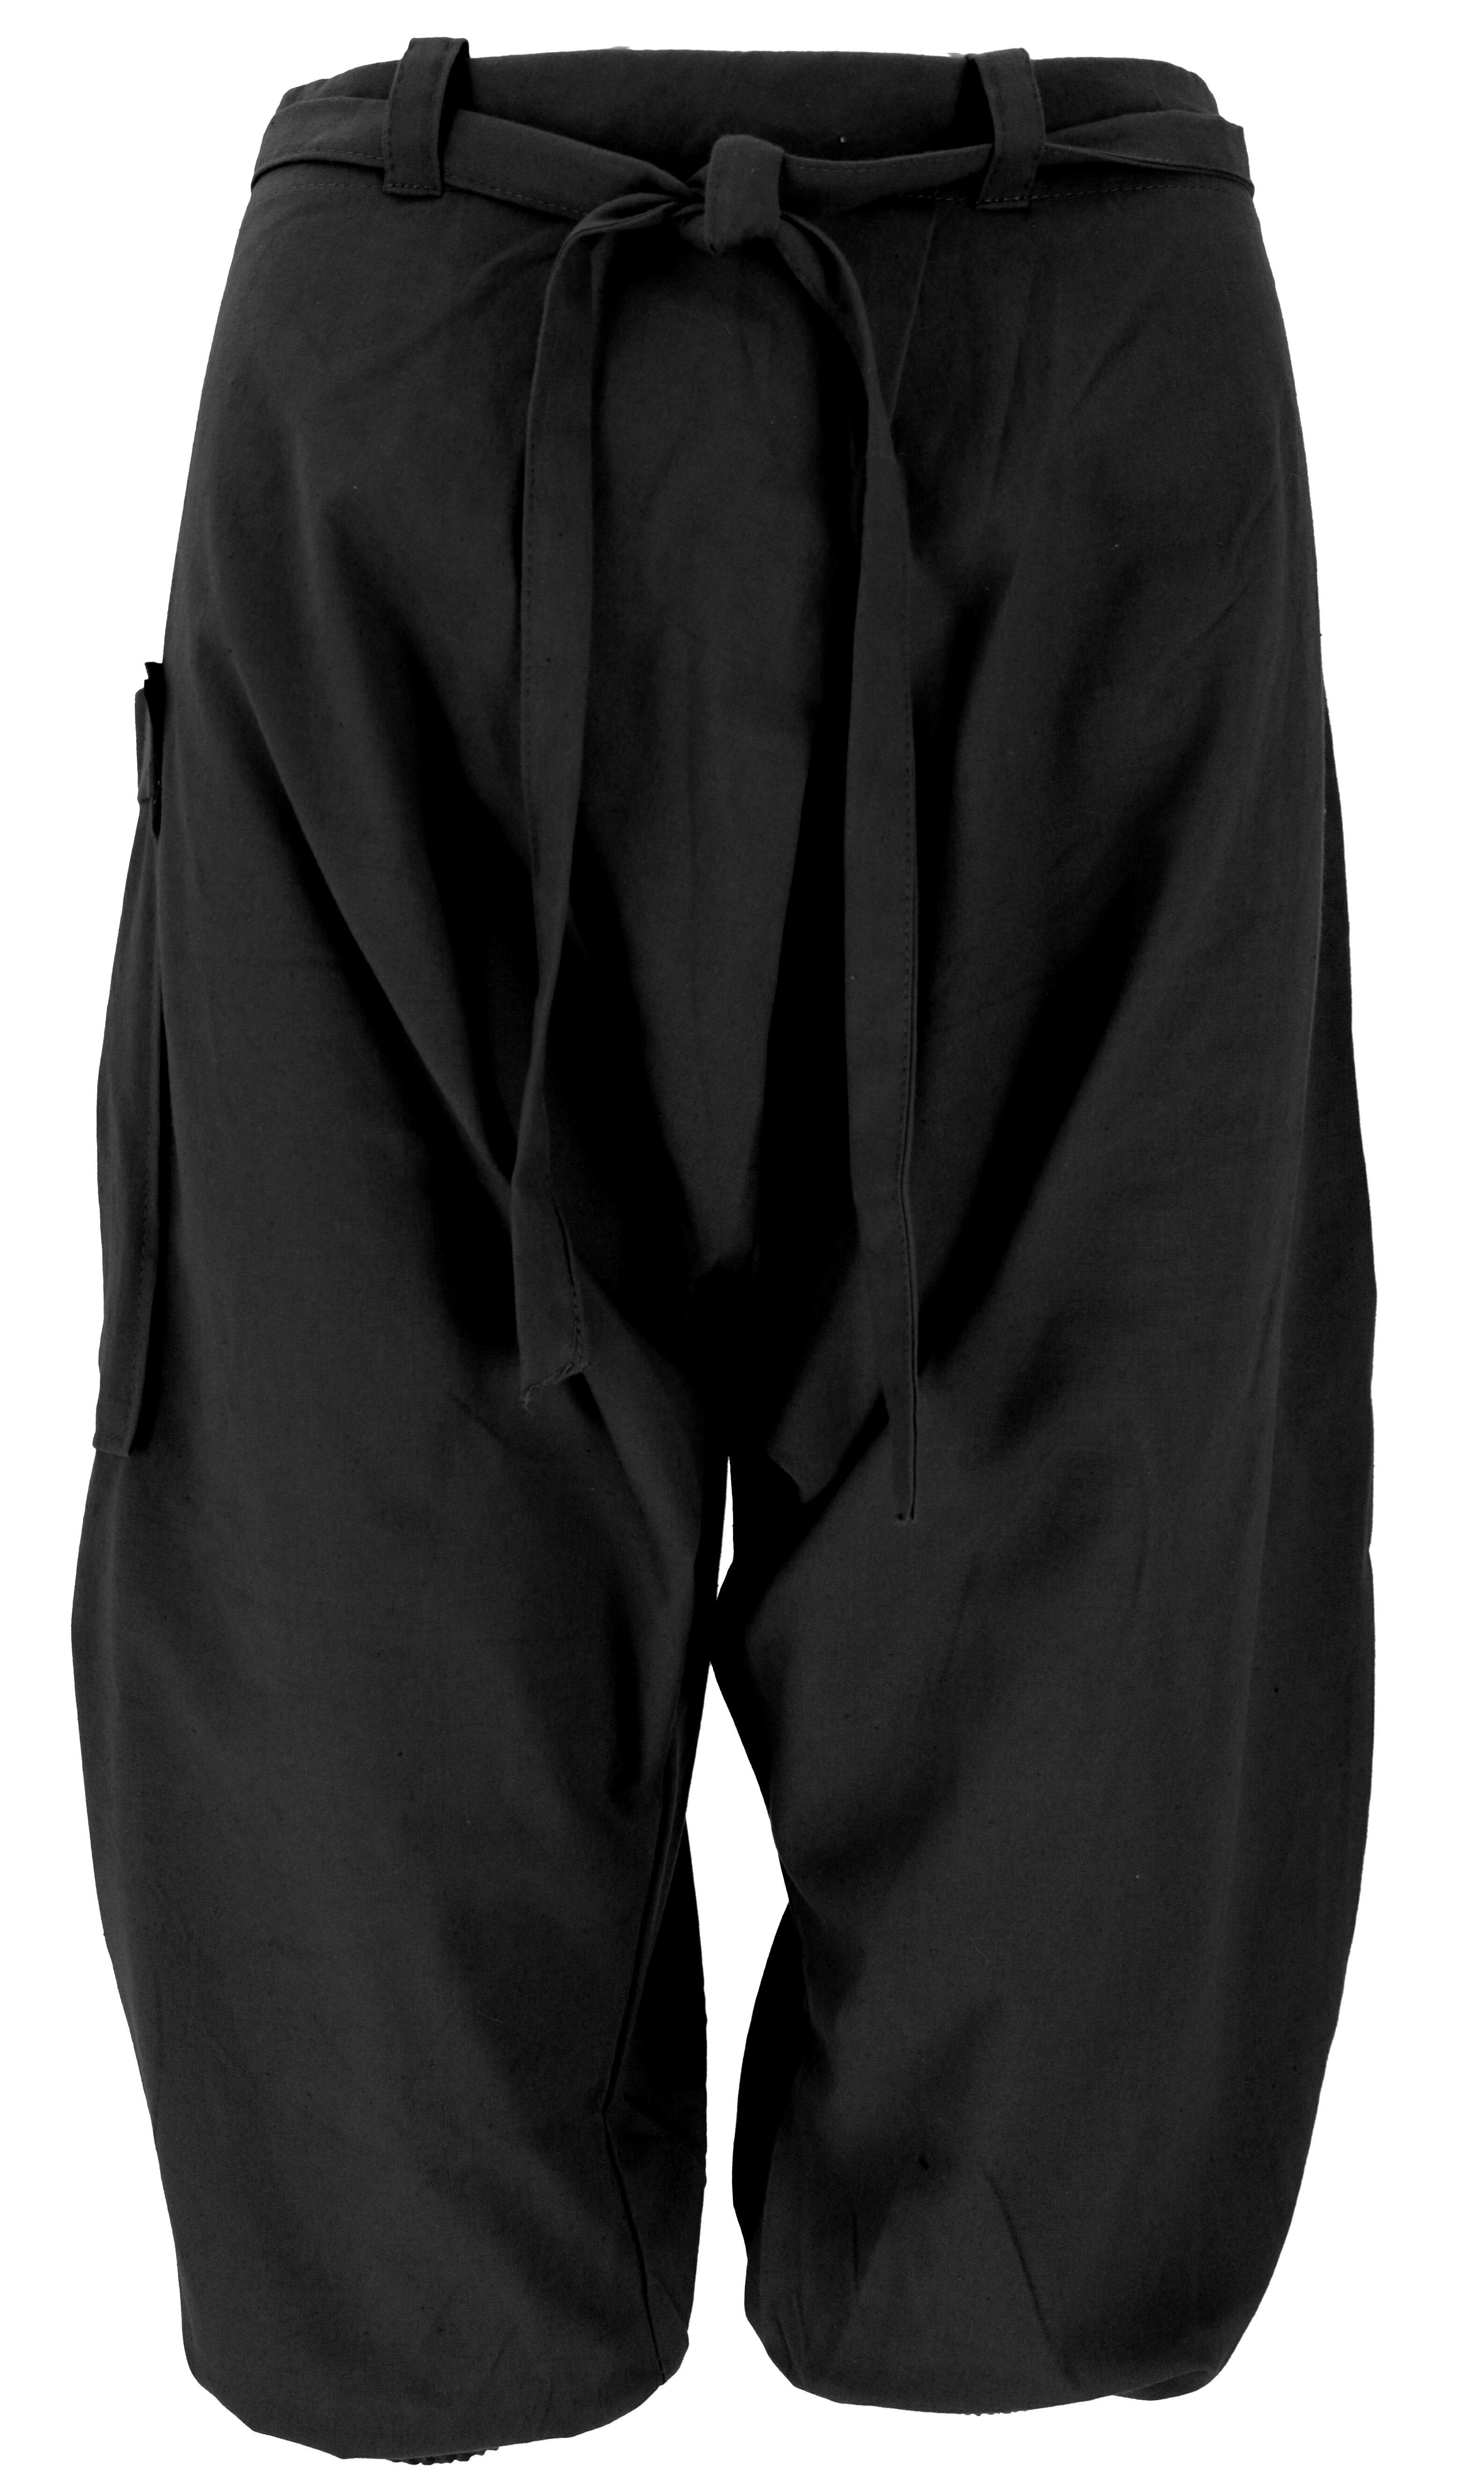 schwarz Baggy - Bekleidung Sarouel Style, Guru-Shop Shorts, alternative Relaxhose Hose Ethno